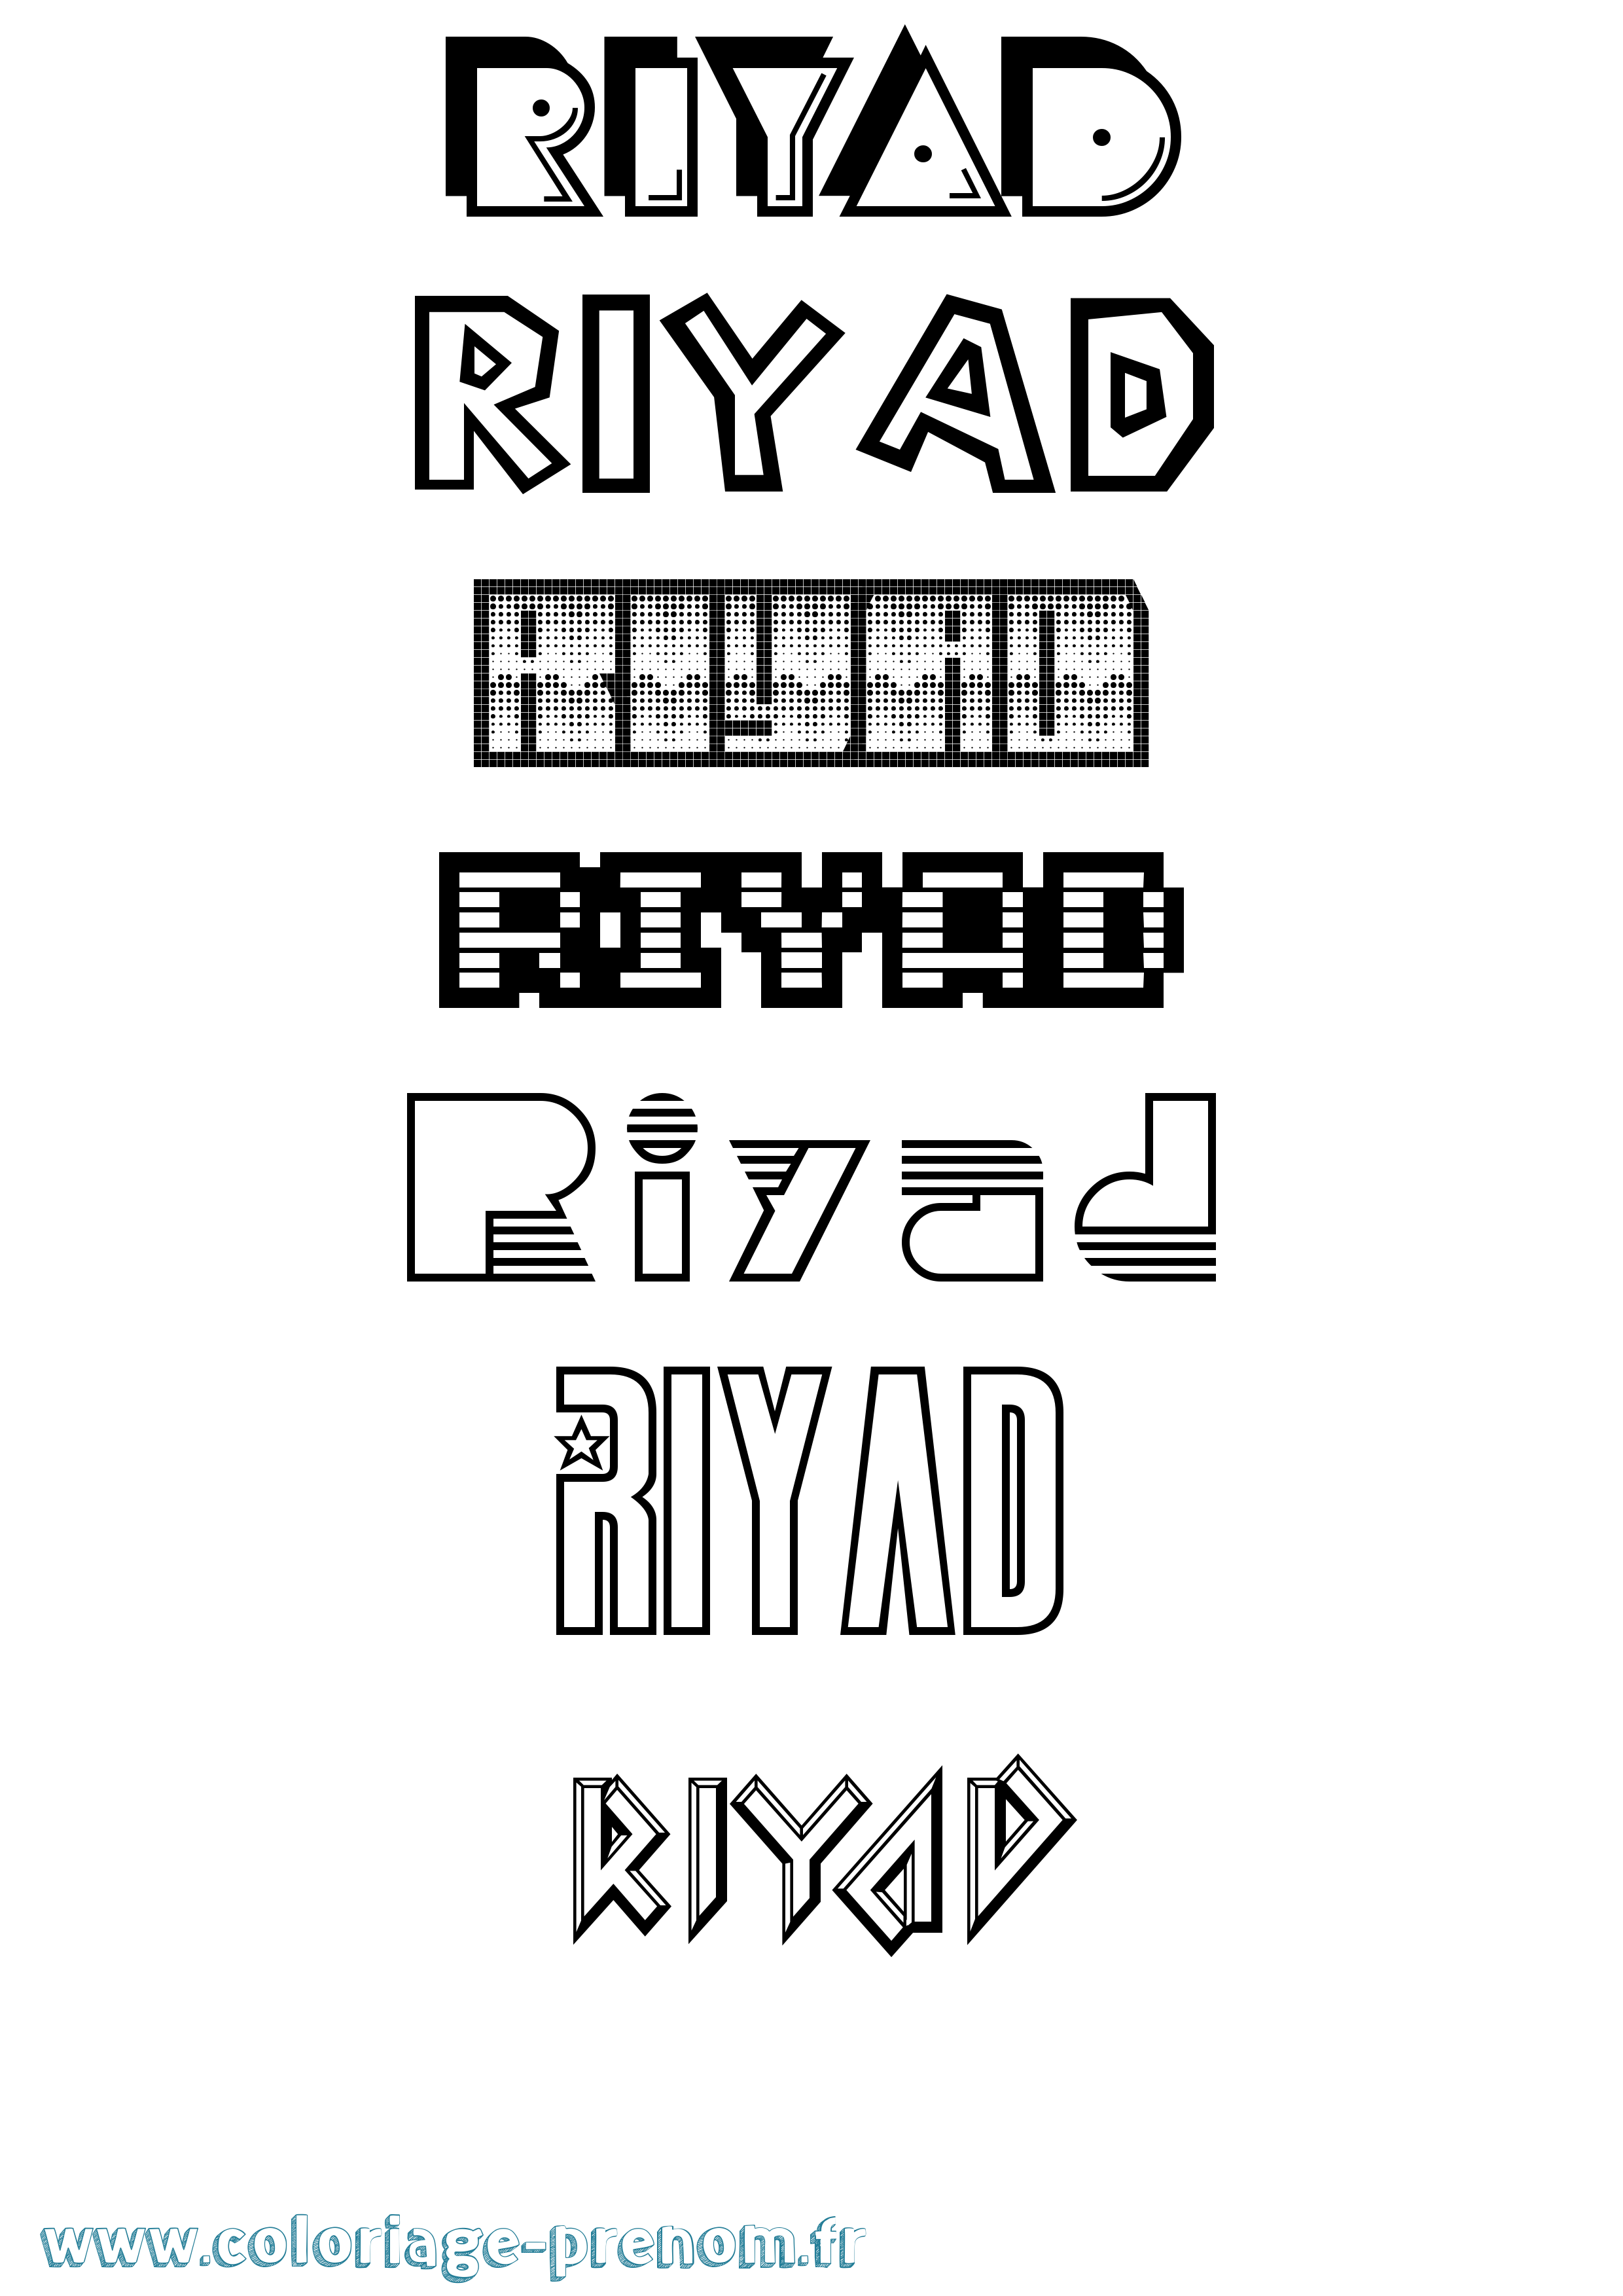 Coloriage prénom Riyad